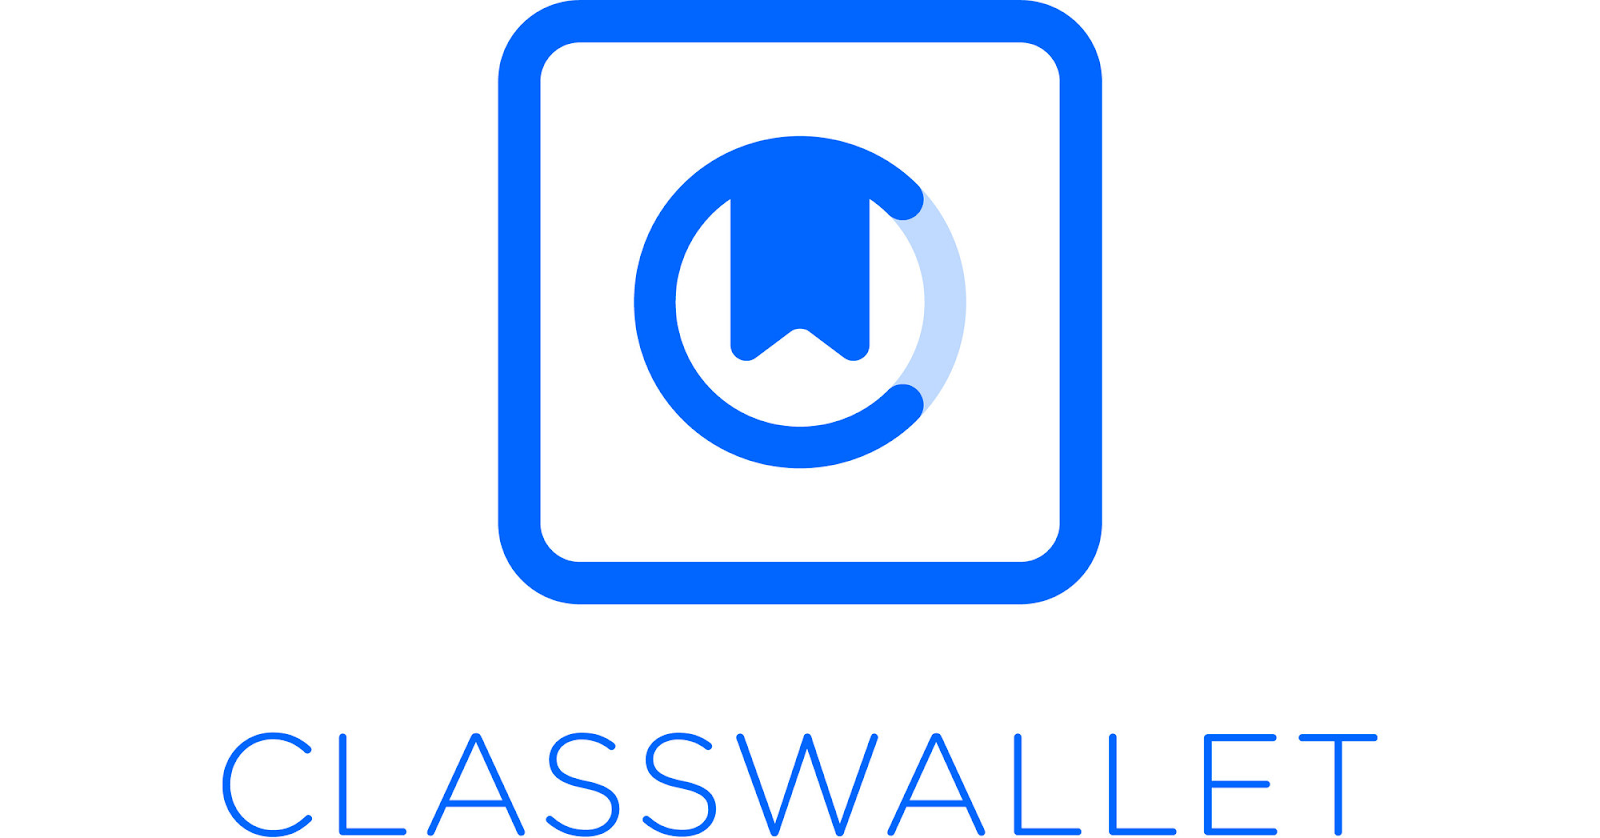 Classwallet logo.